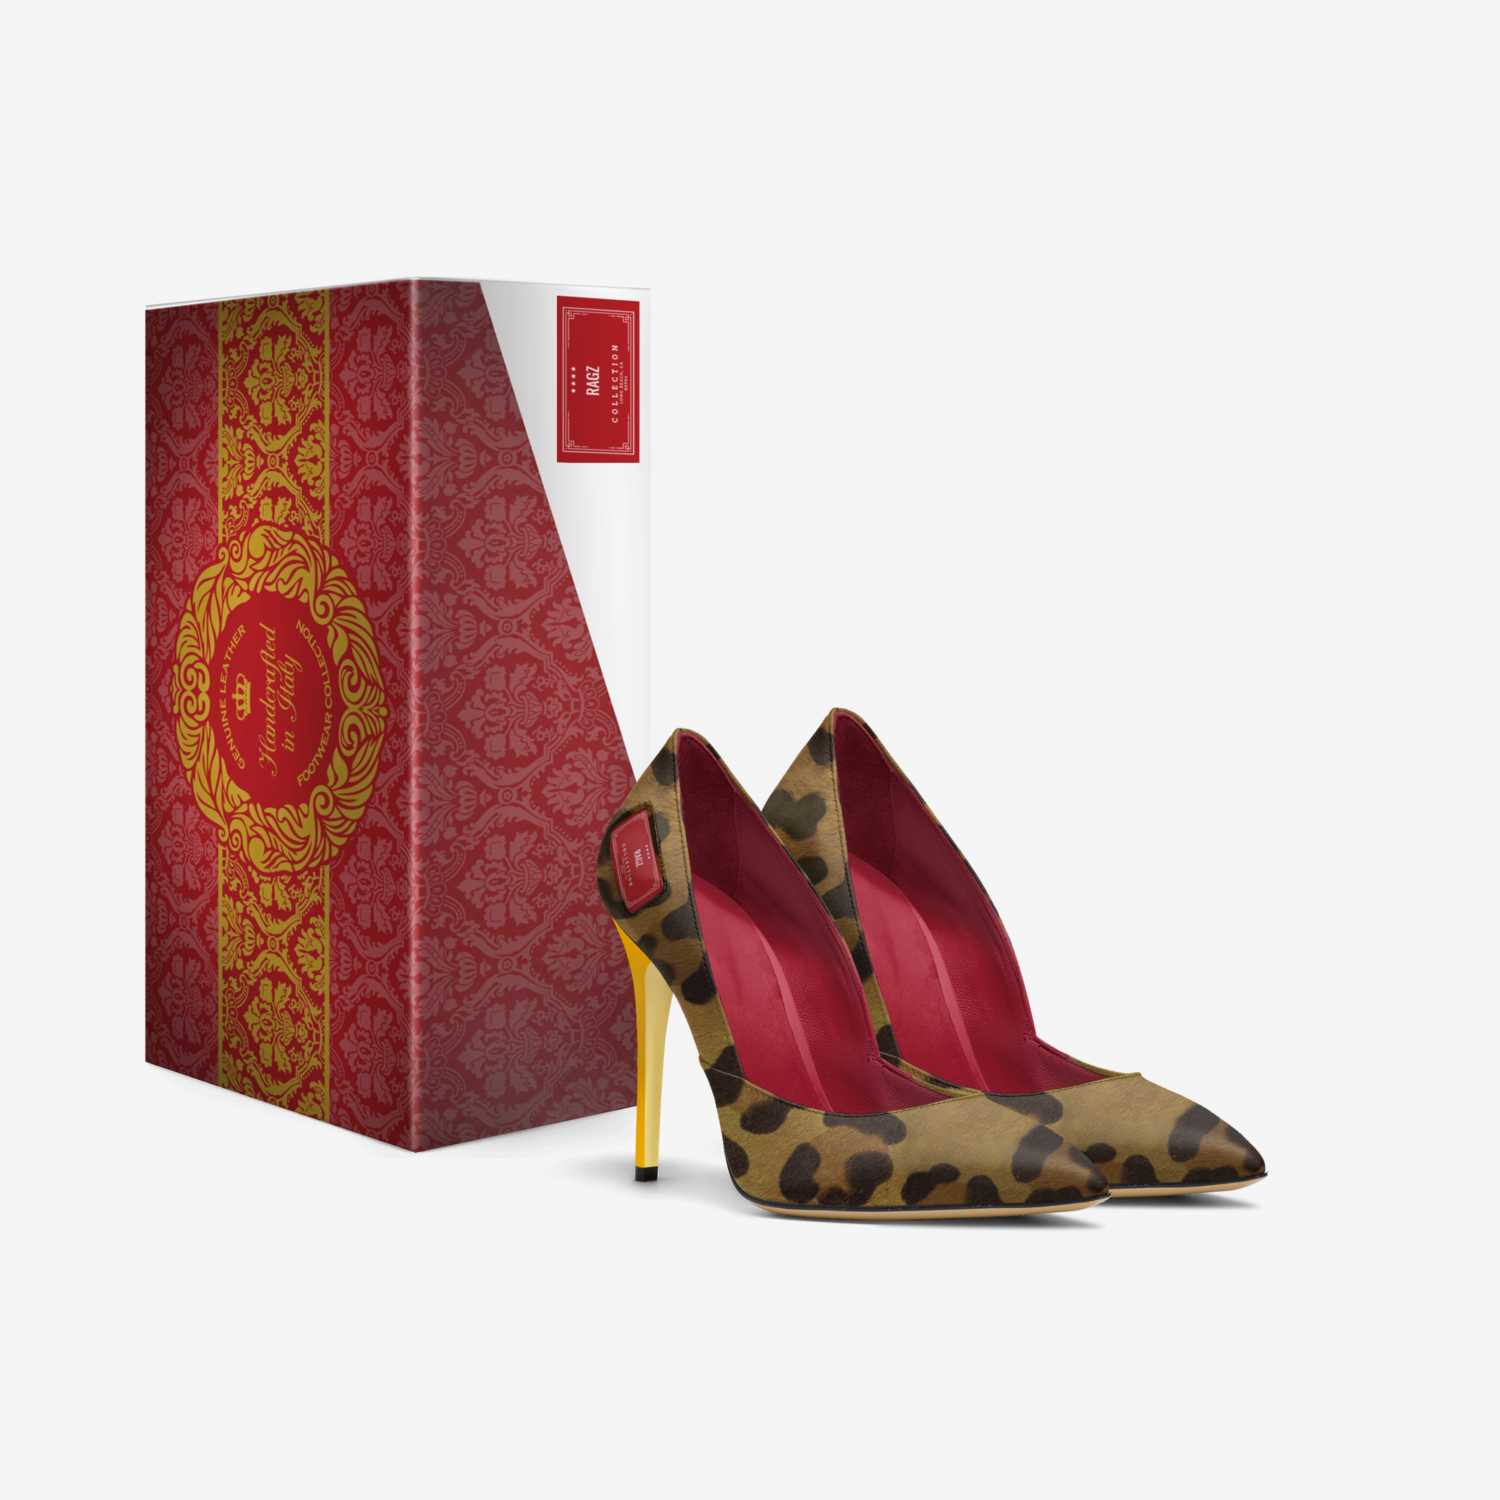 RAGZ custom made in Italy shoes by Tarsha Hagan | Box view